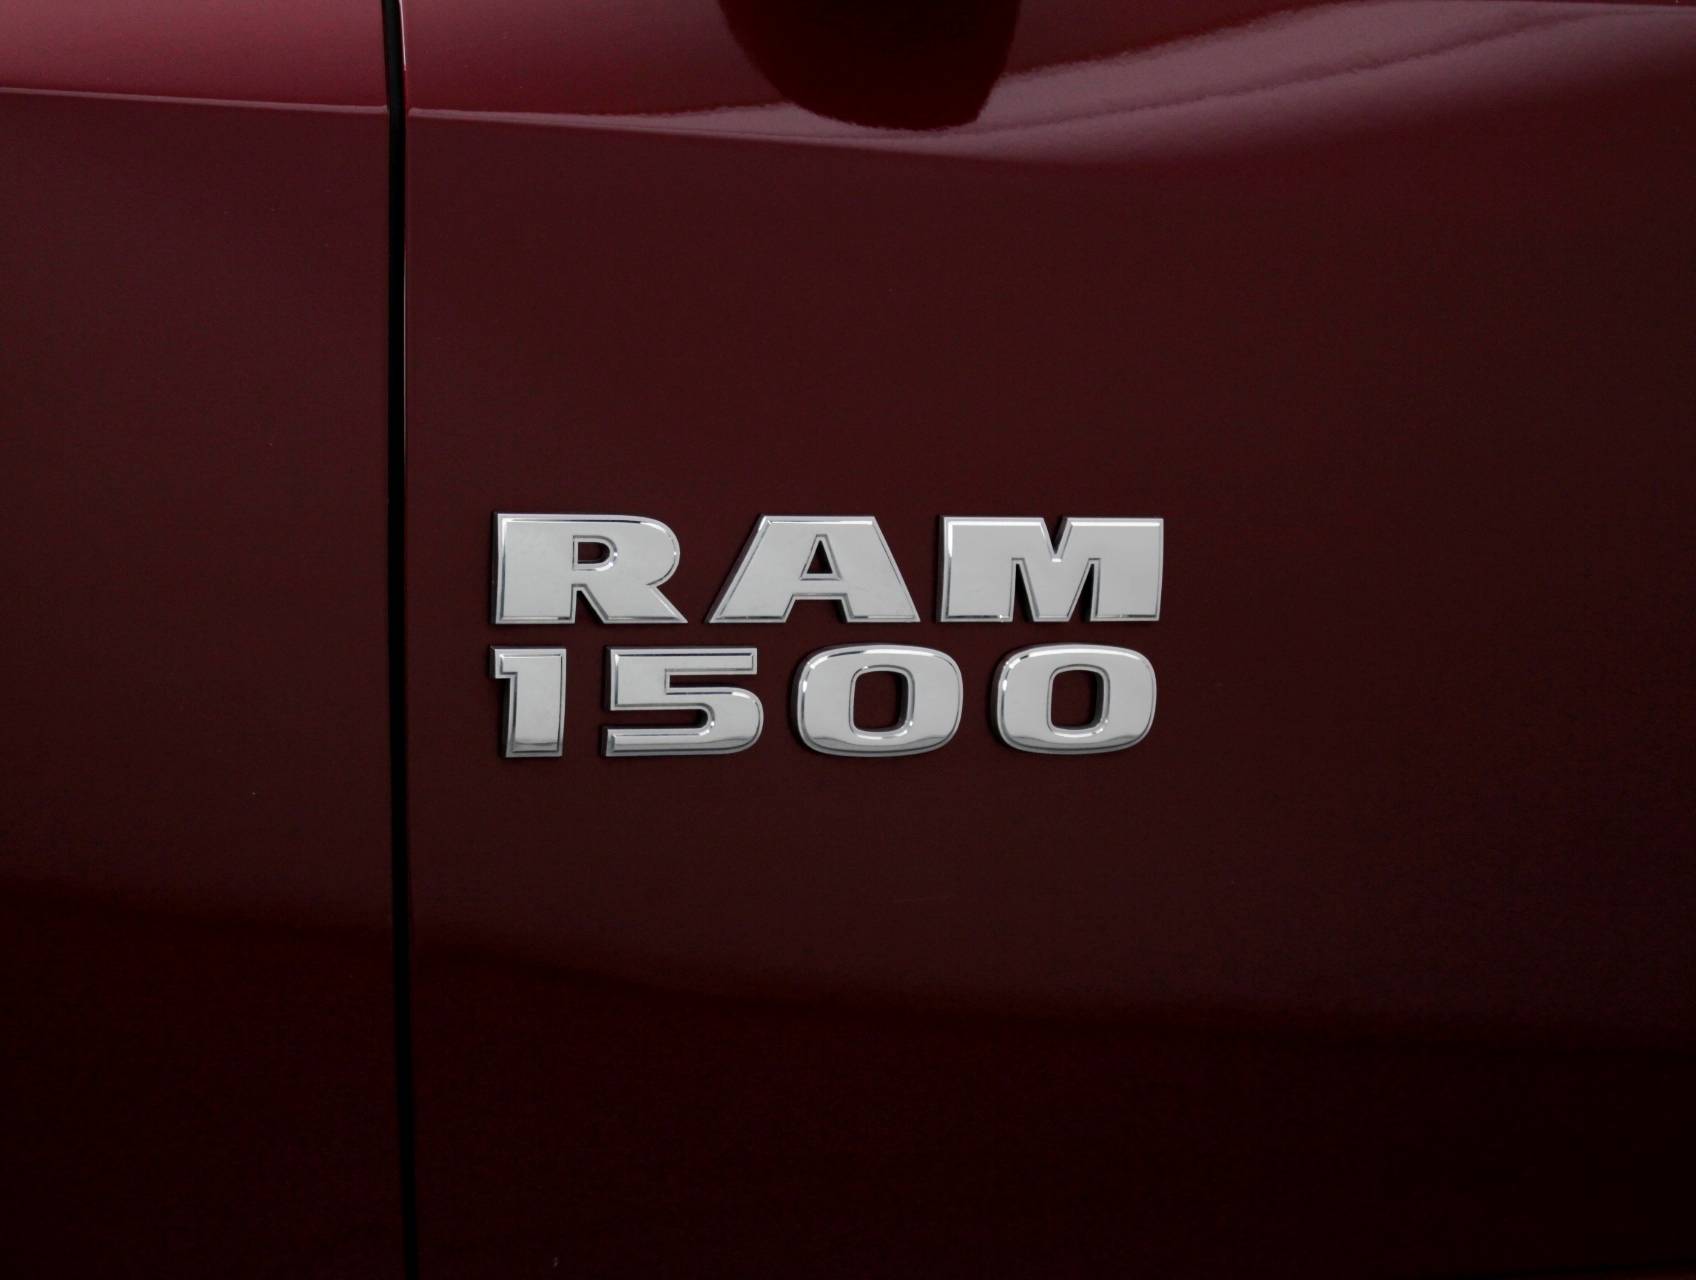 Florida Fine Cars - Used RAM 1500 2016 WEST PALM Express